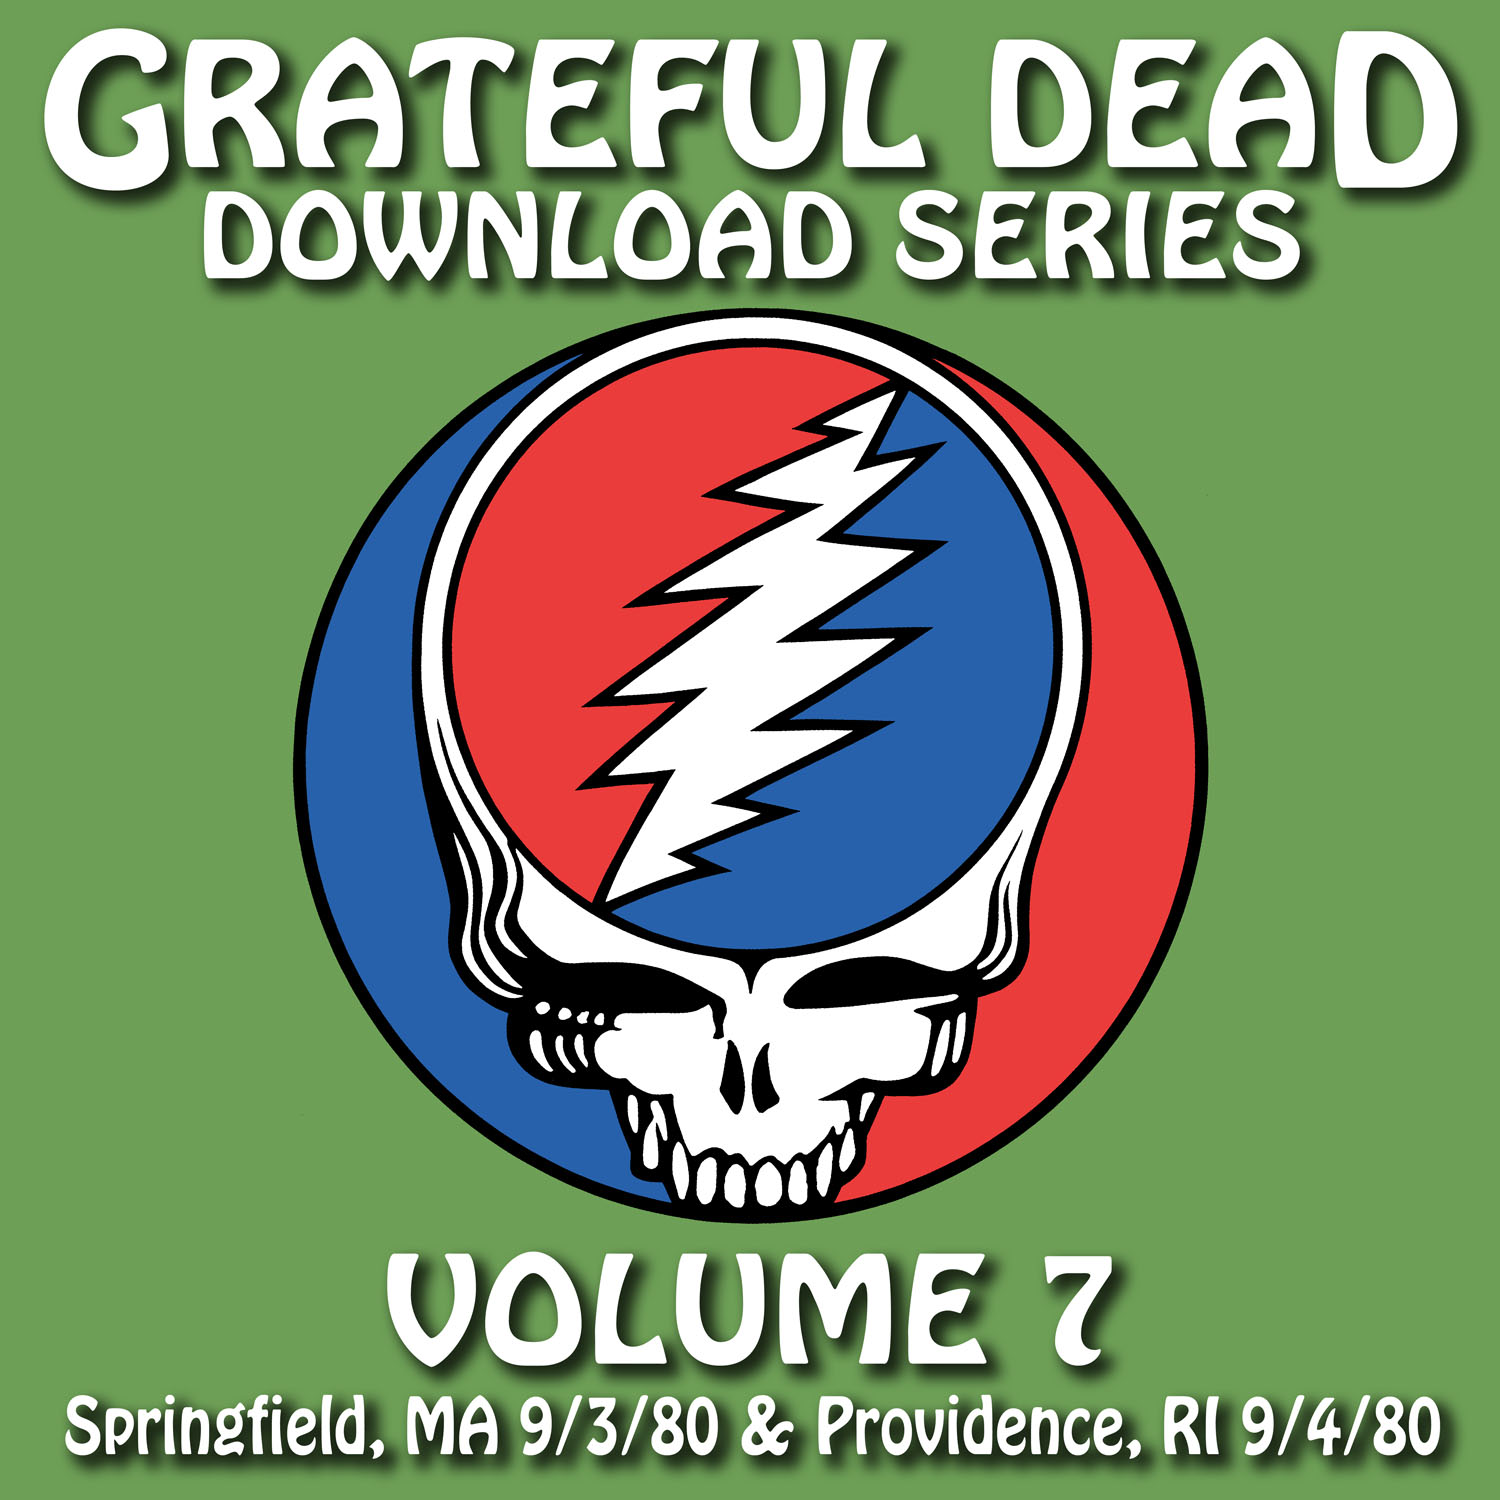 Grateful Dead Download Series 7 album cover artwork